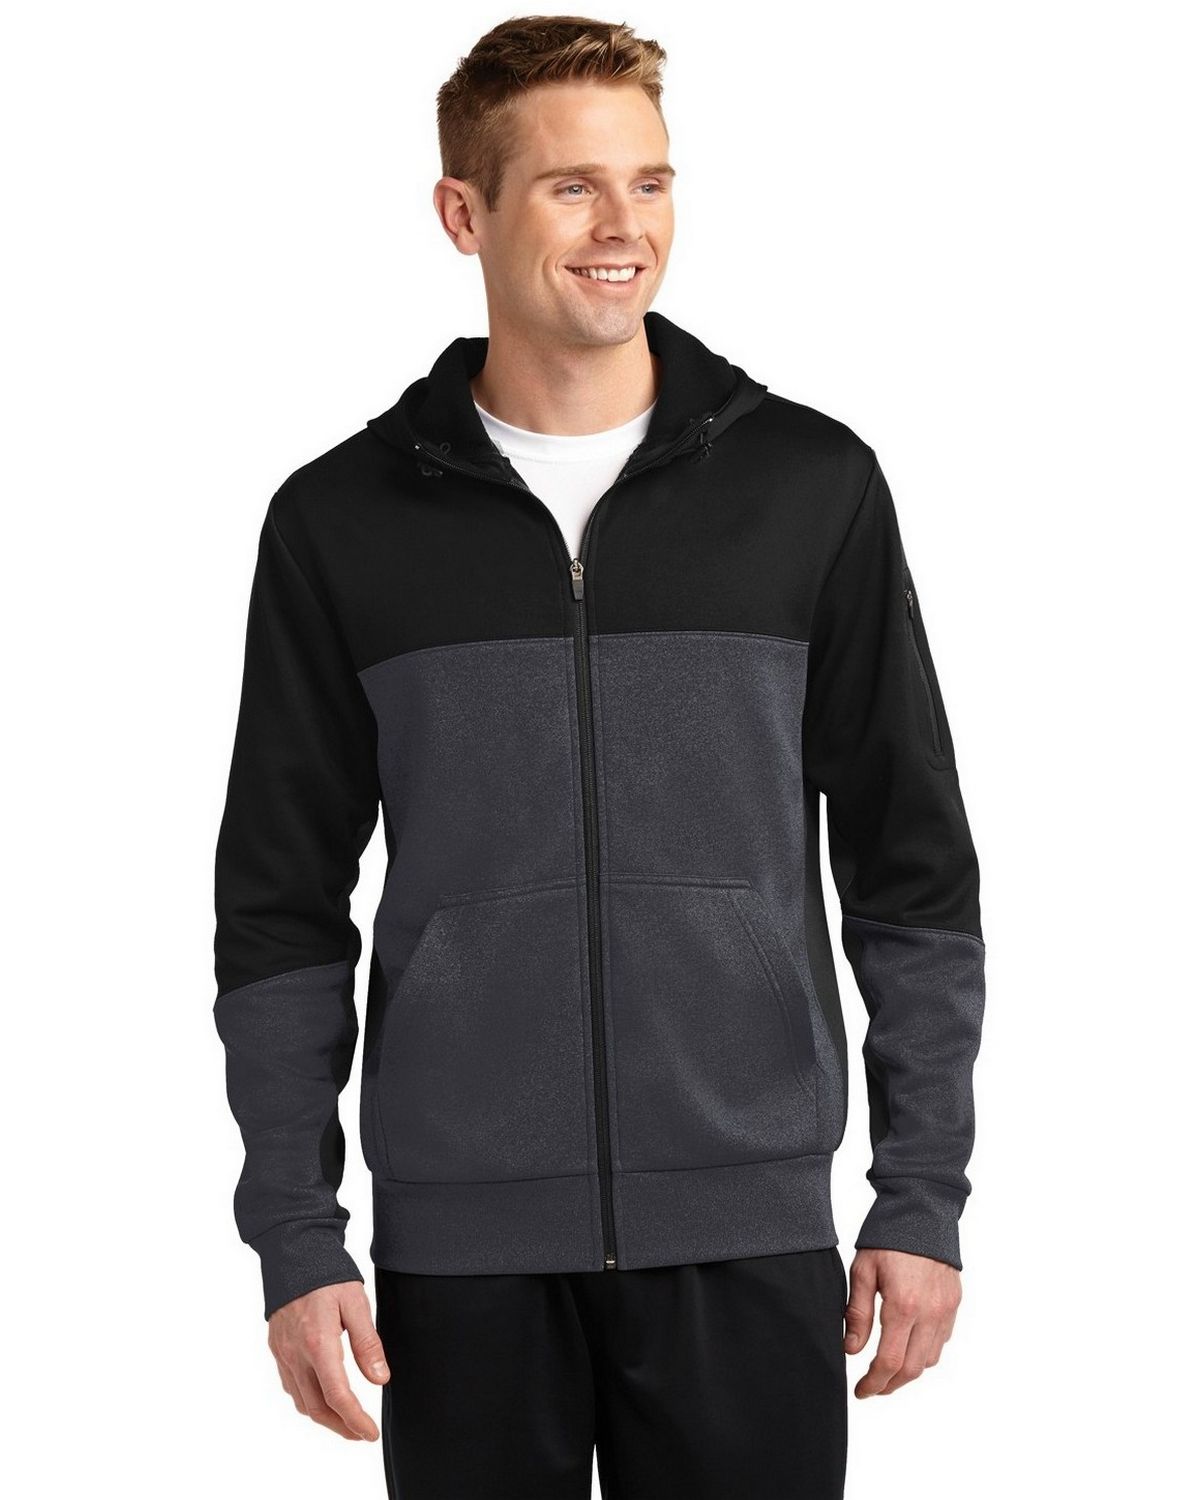 men's tech fleece jacket